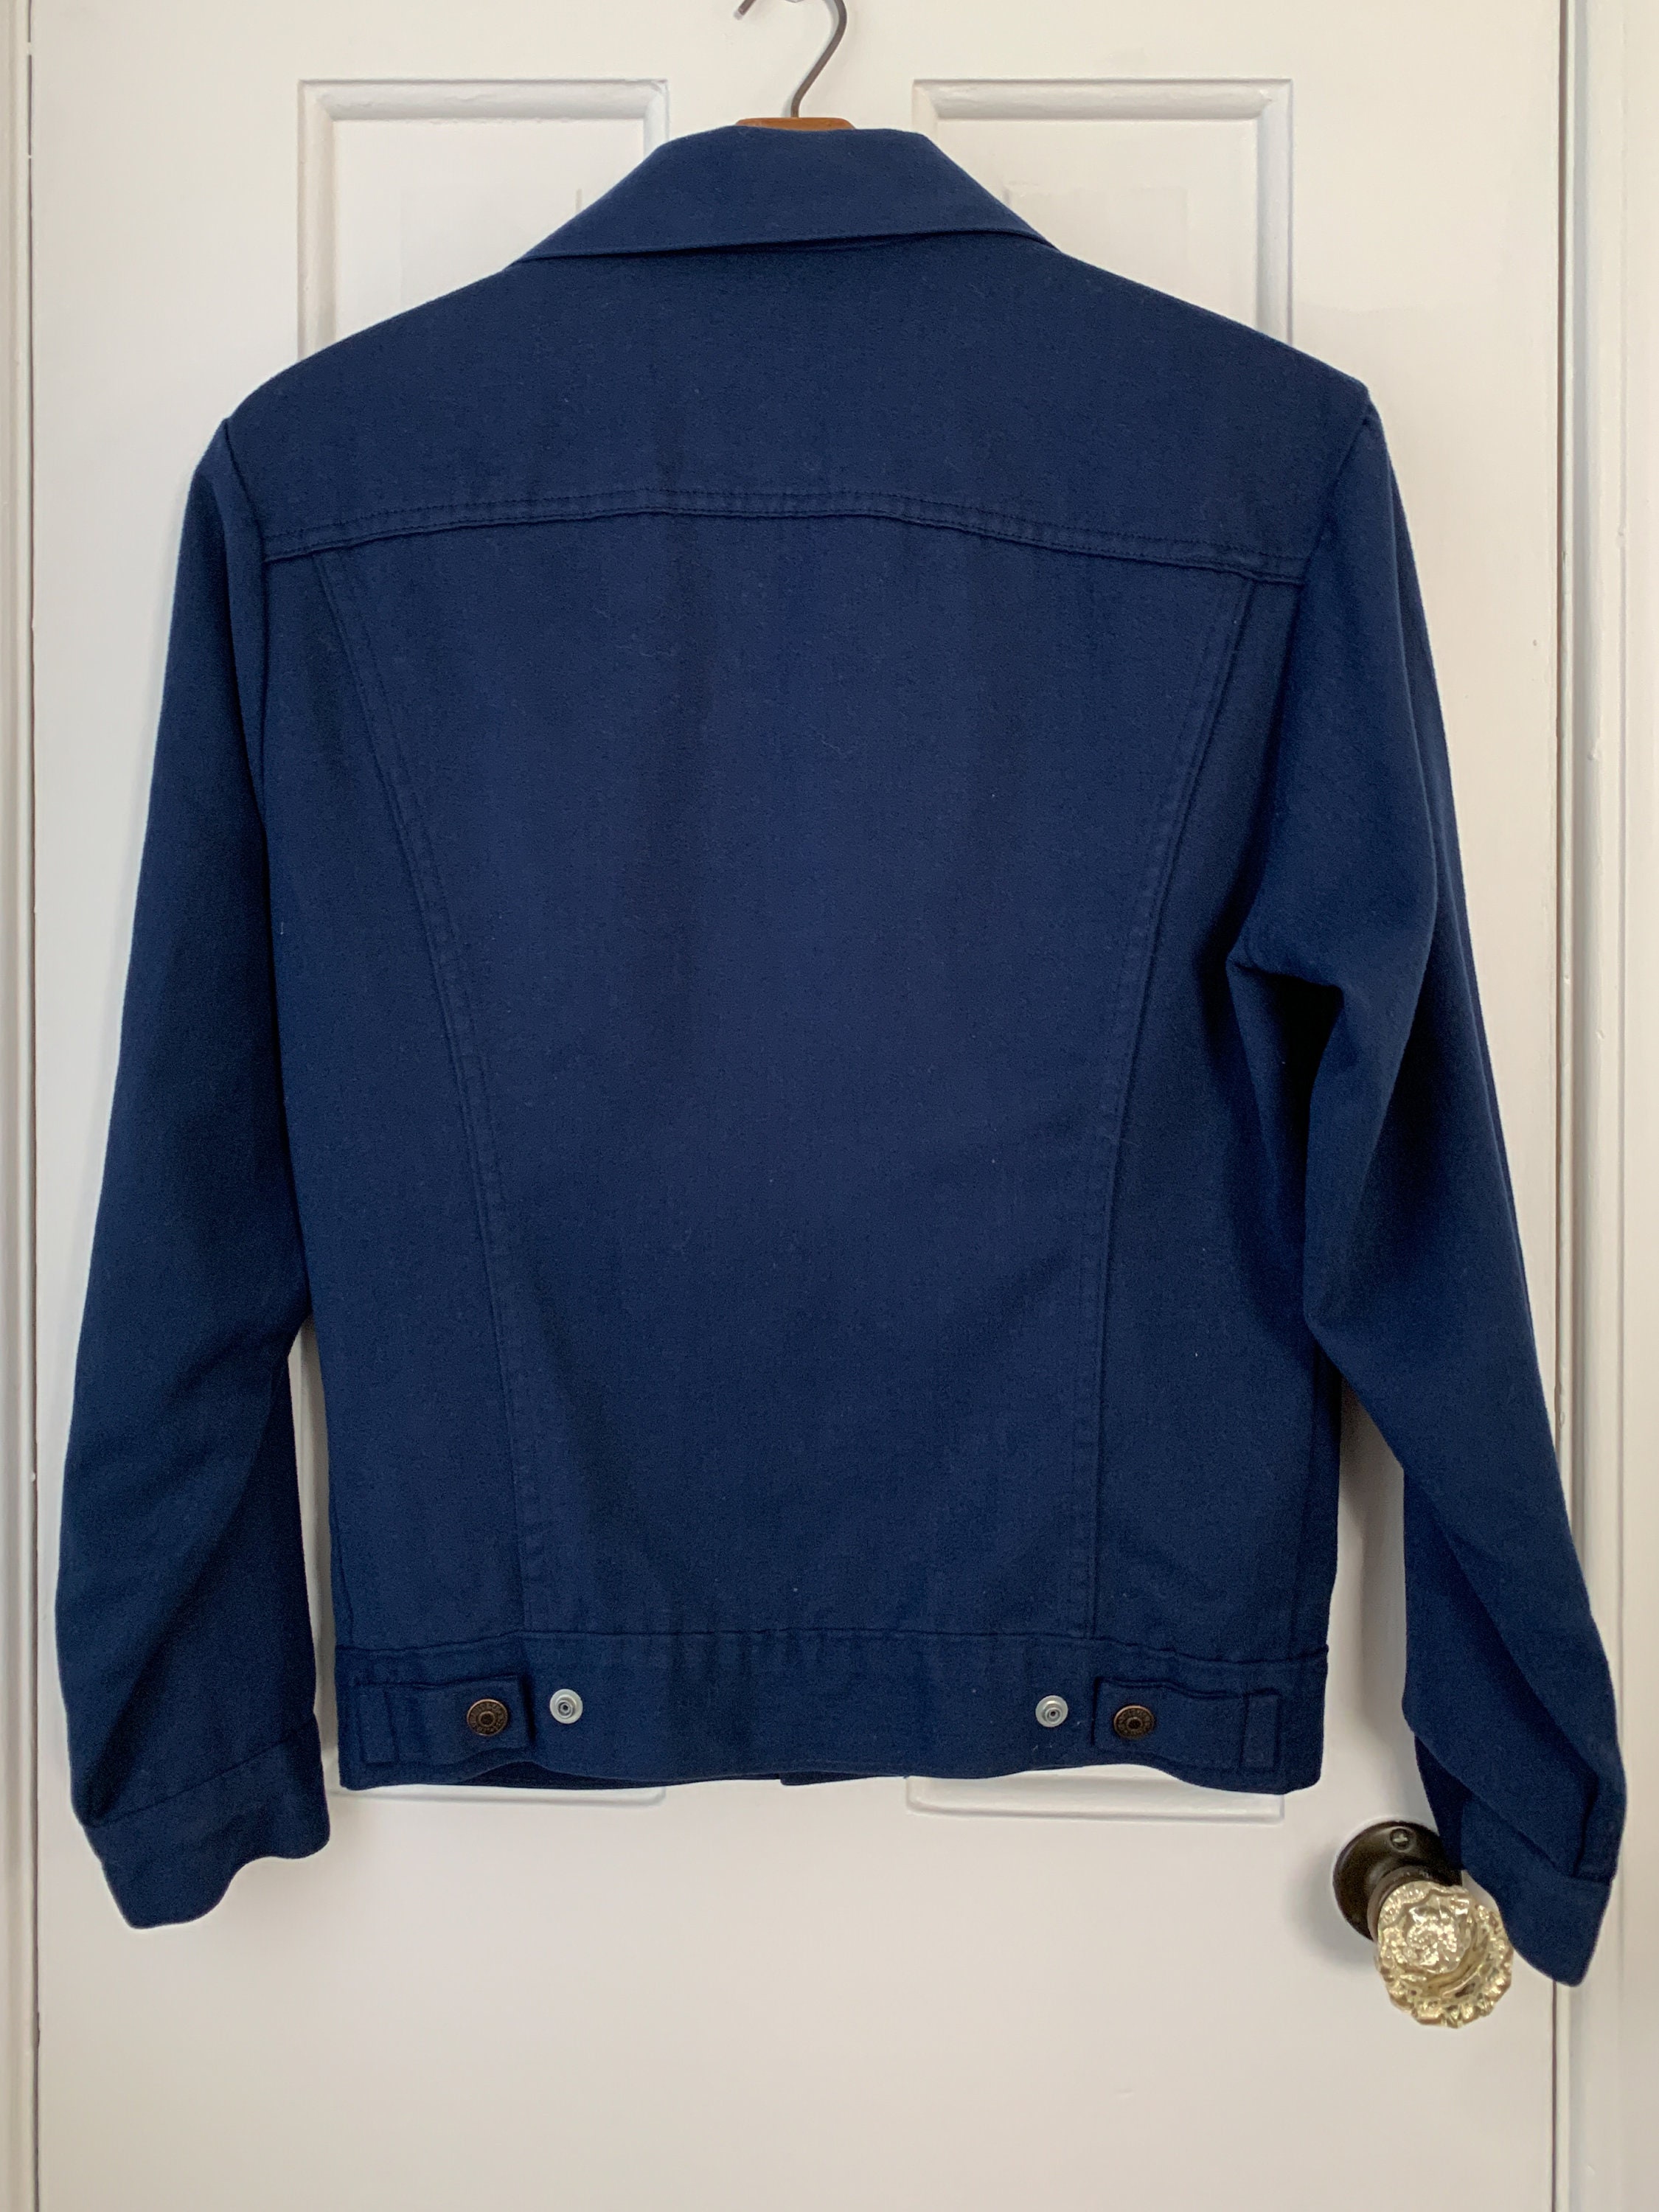 Vintage Levis dark blue twill jean jacket, Size S